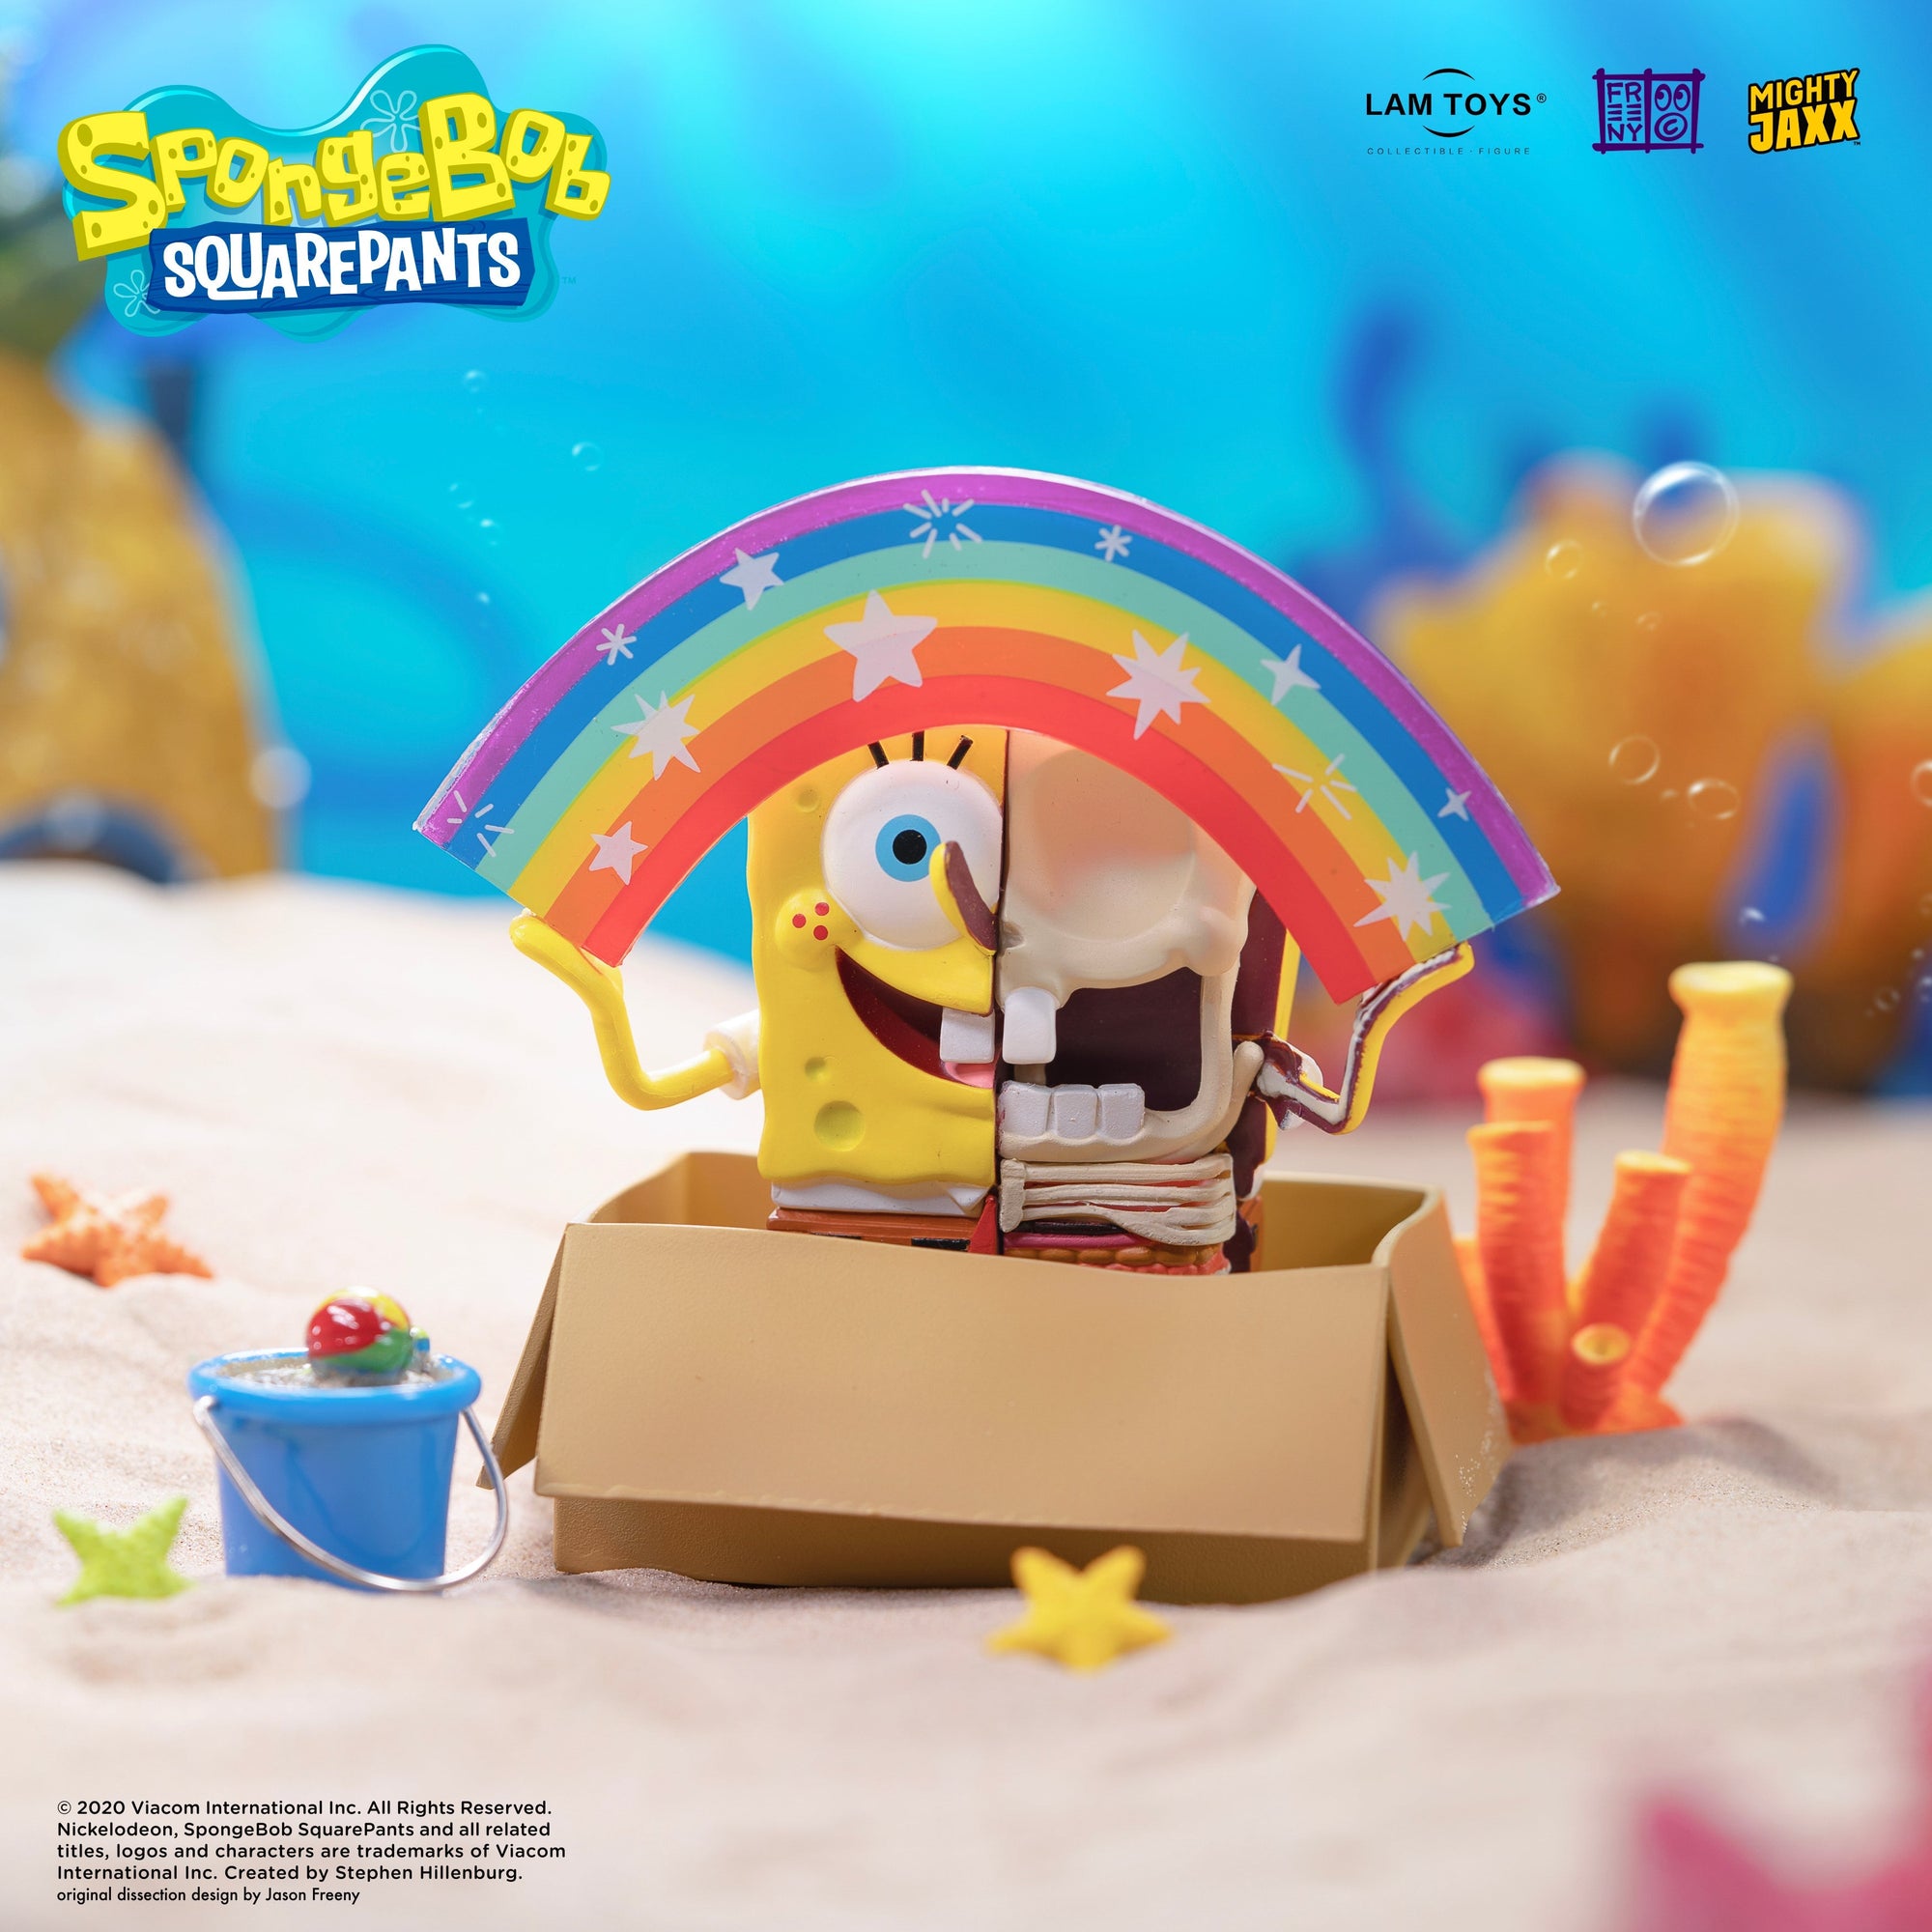 SpongeBob SquarePants (Meme Edition) Hidden Dissectables Blind Box Series by Jason Freeny x Mighty Jaxx